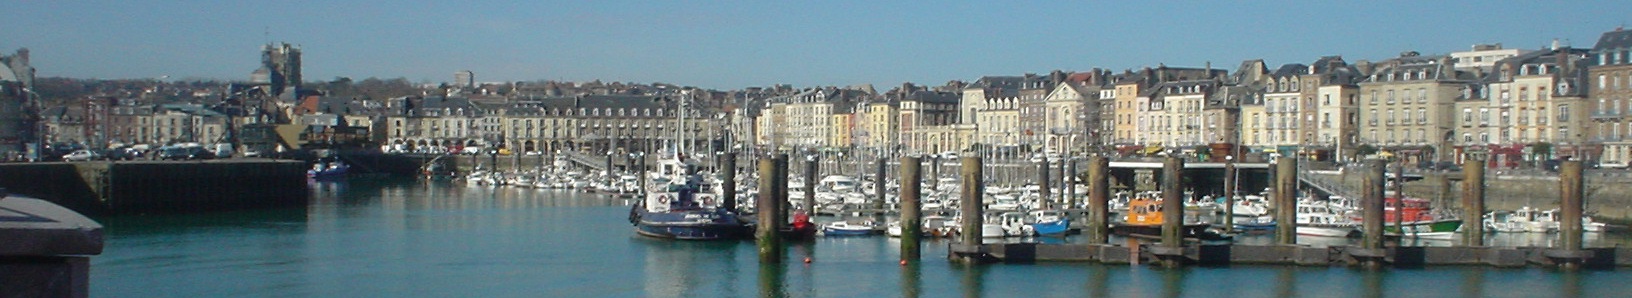 Dieppe Harbour